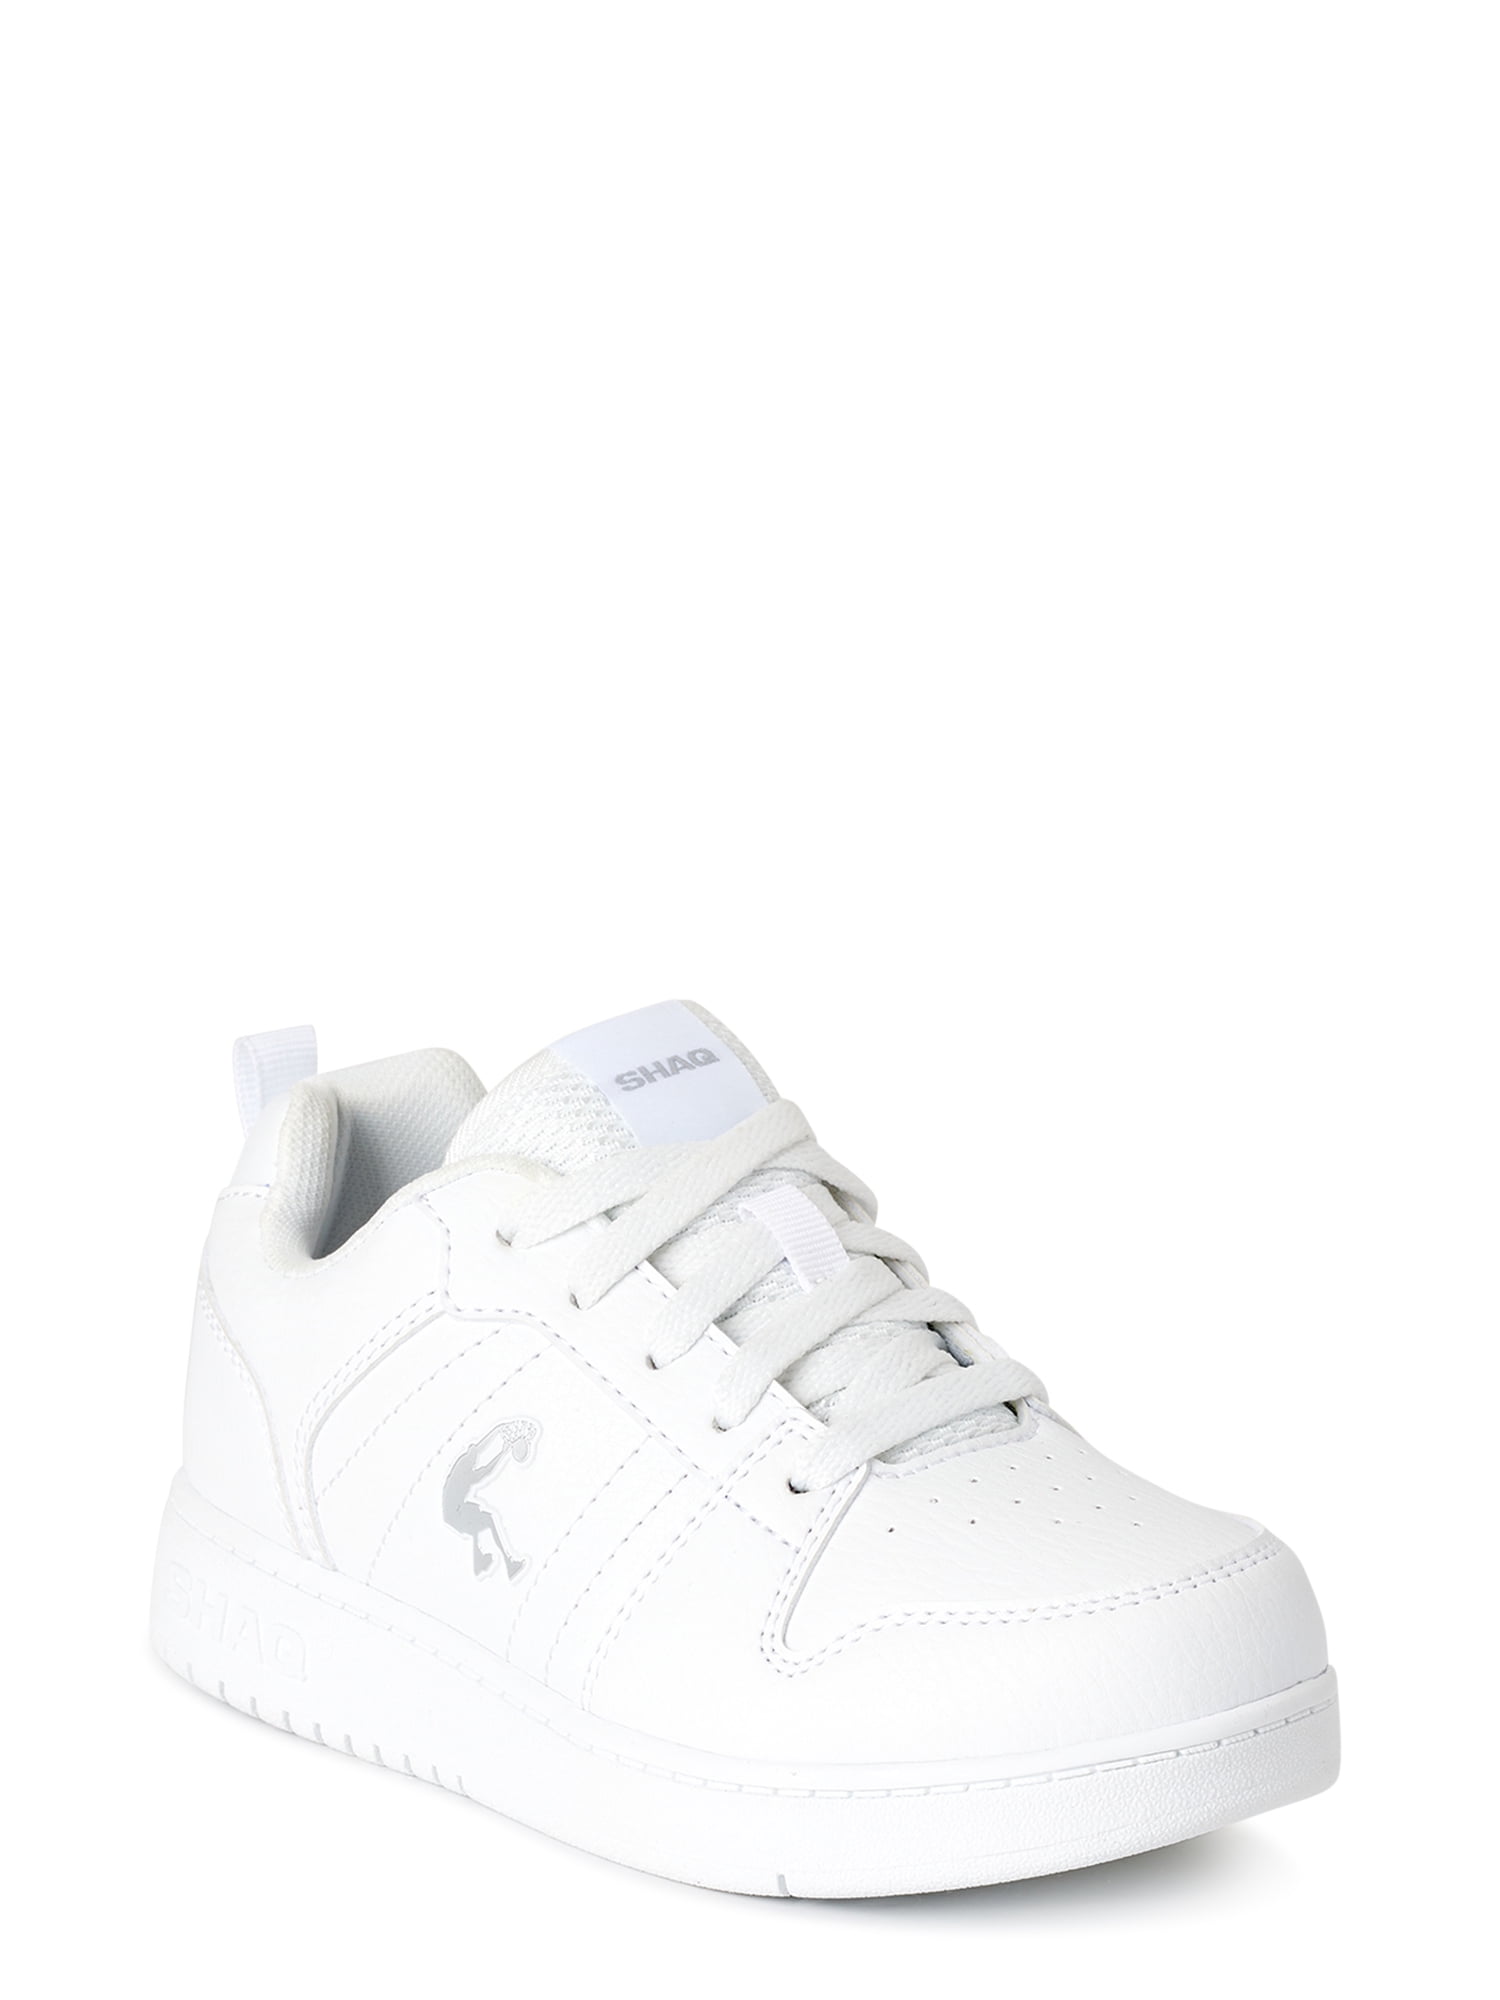 Black/White Shaq Kids Shoes Flavor Athletic Sneaker Size 13